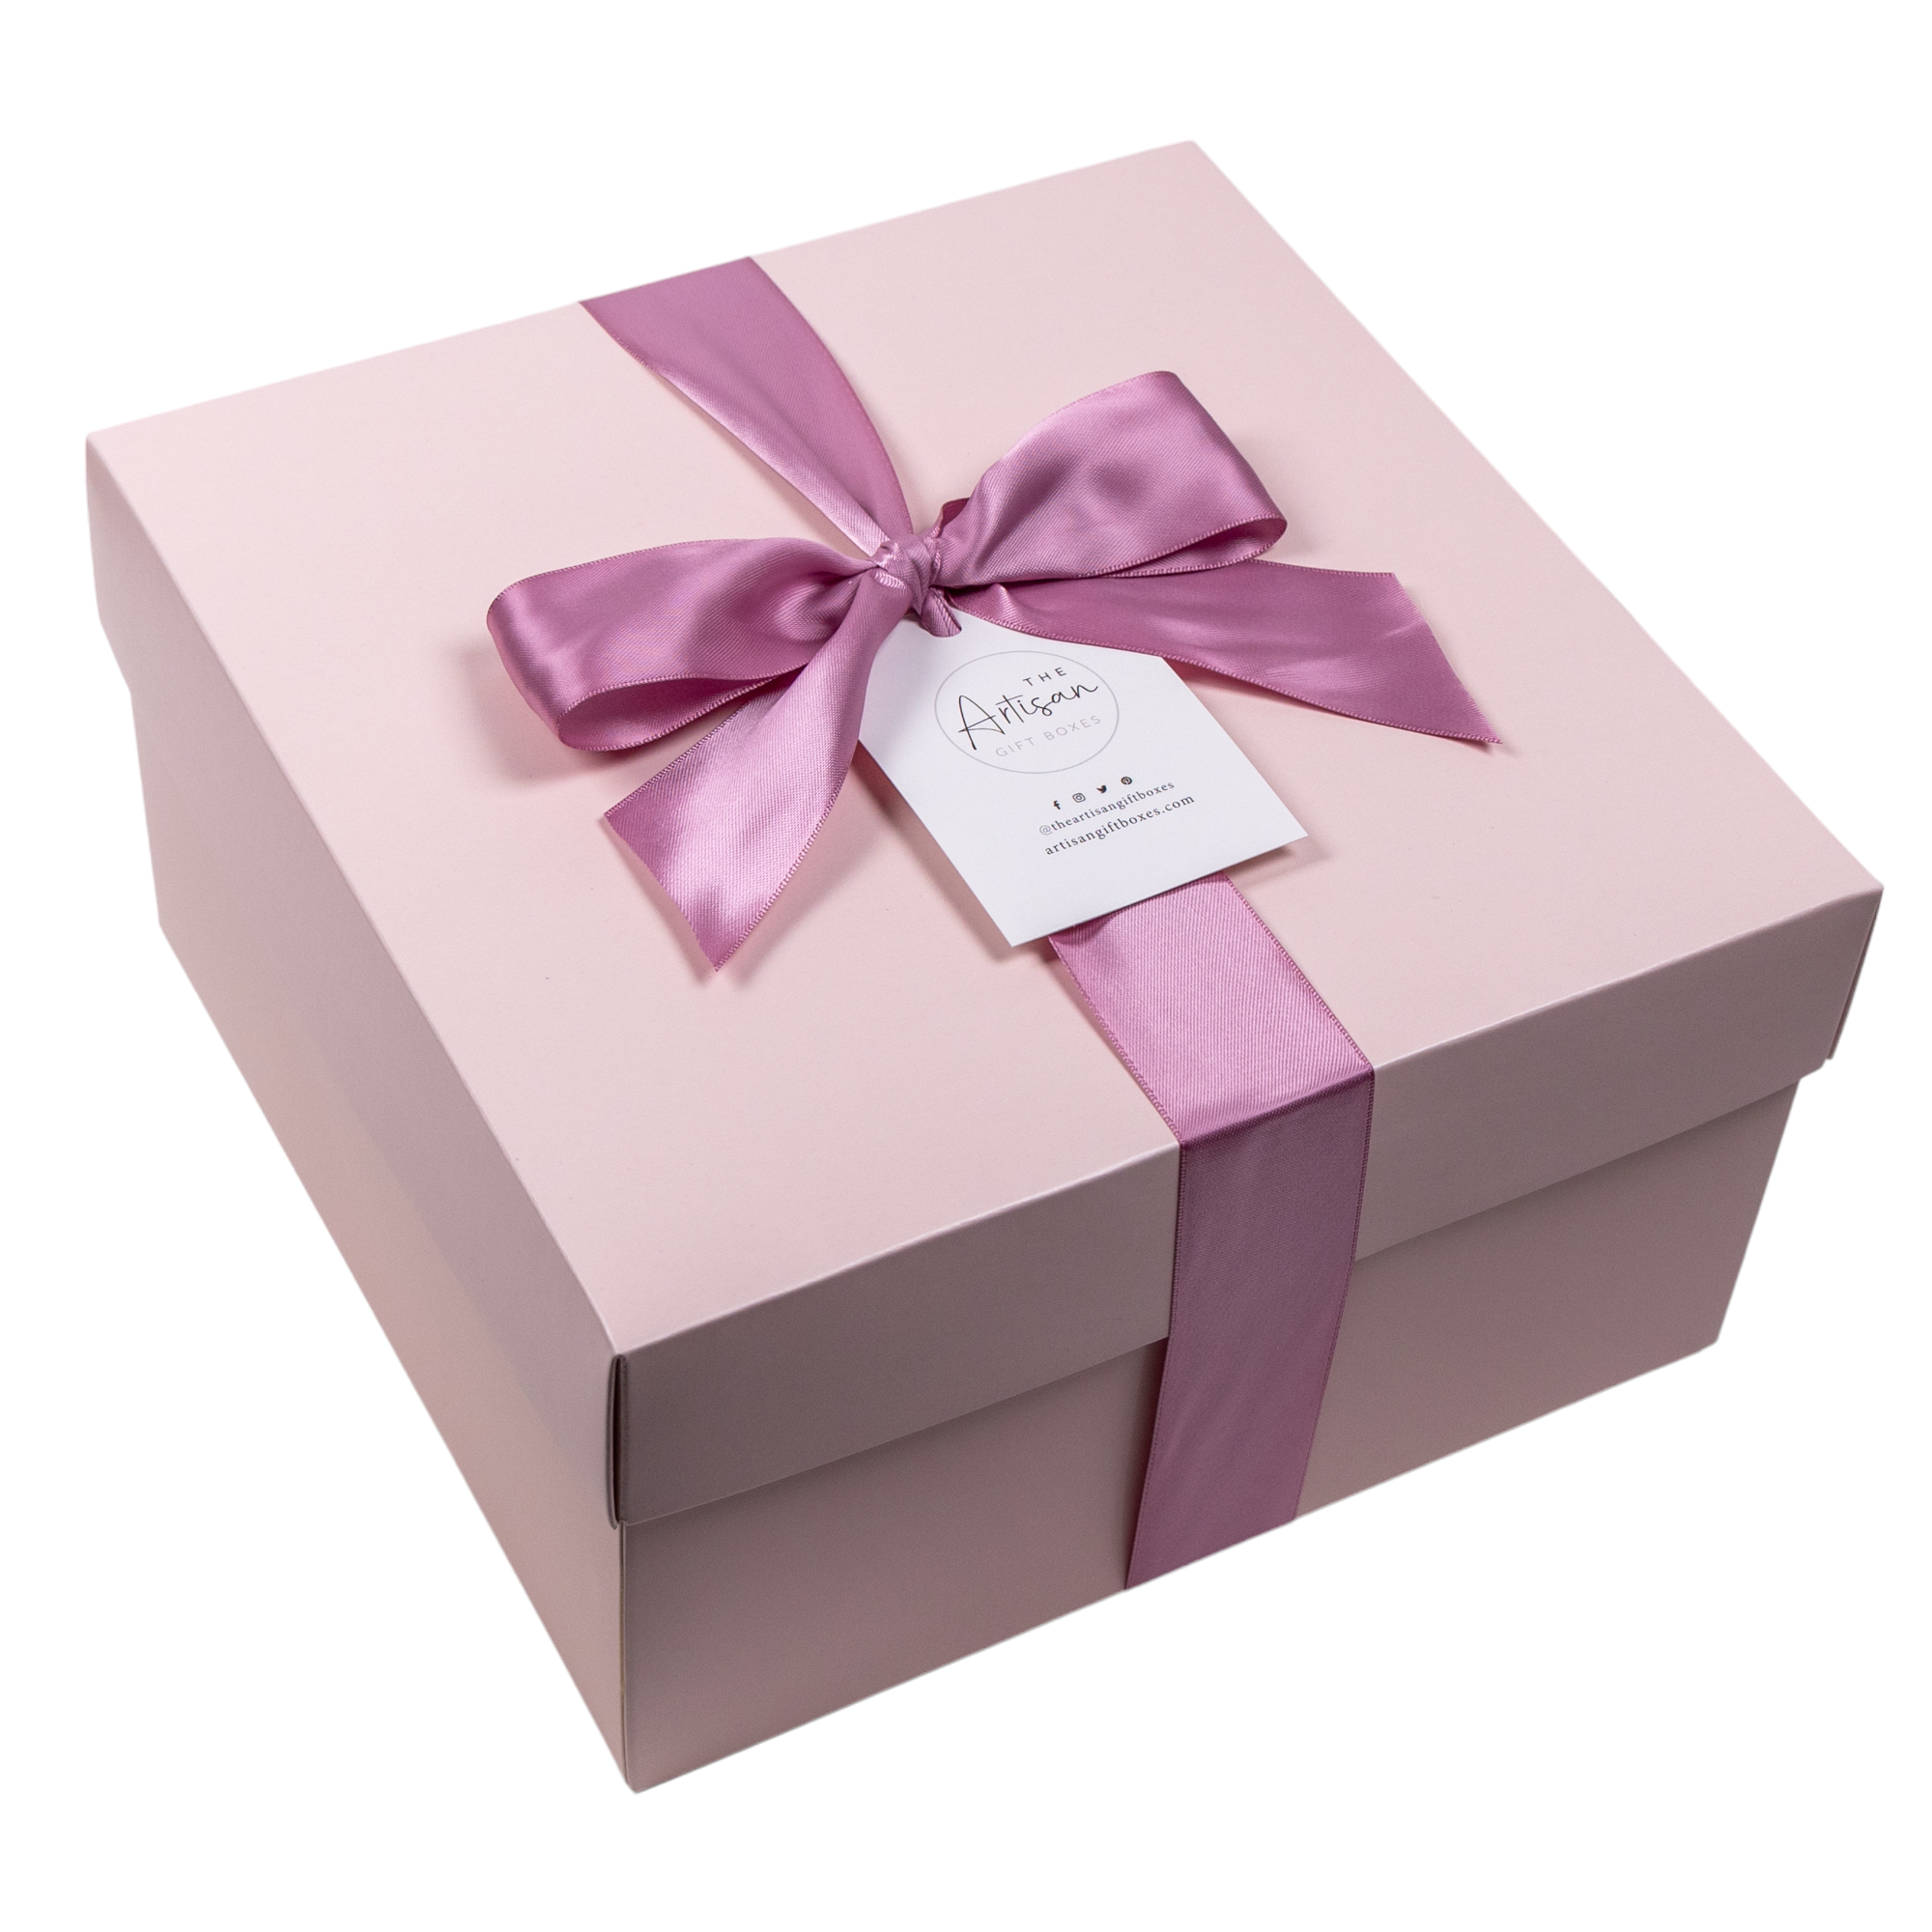 Rose Heart Gift Box for Her